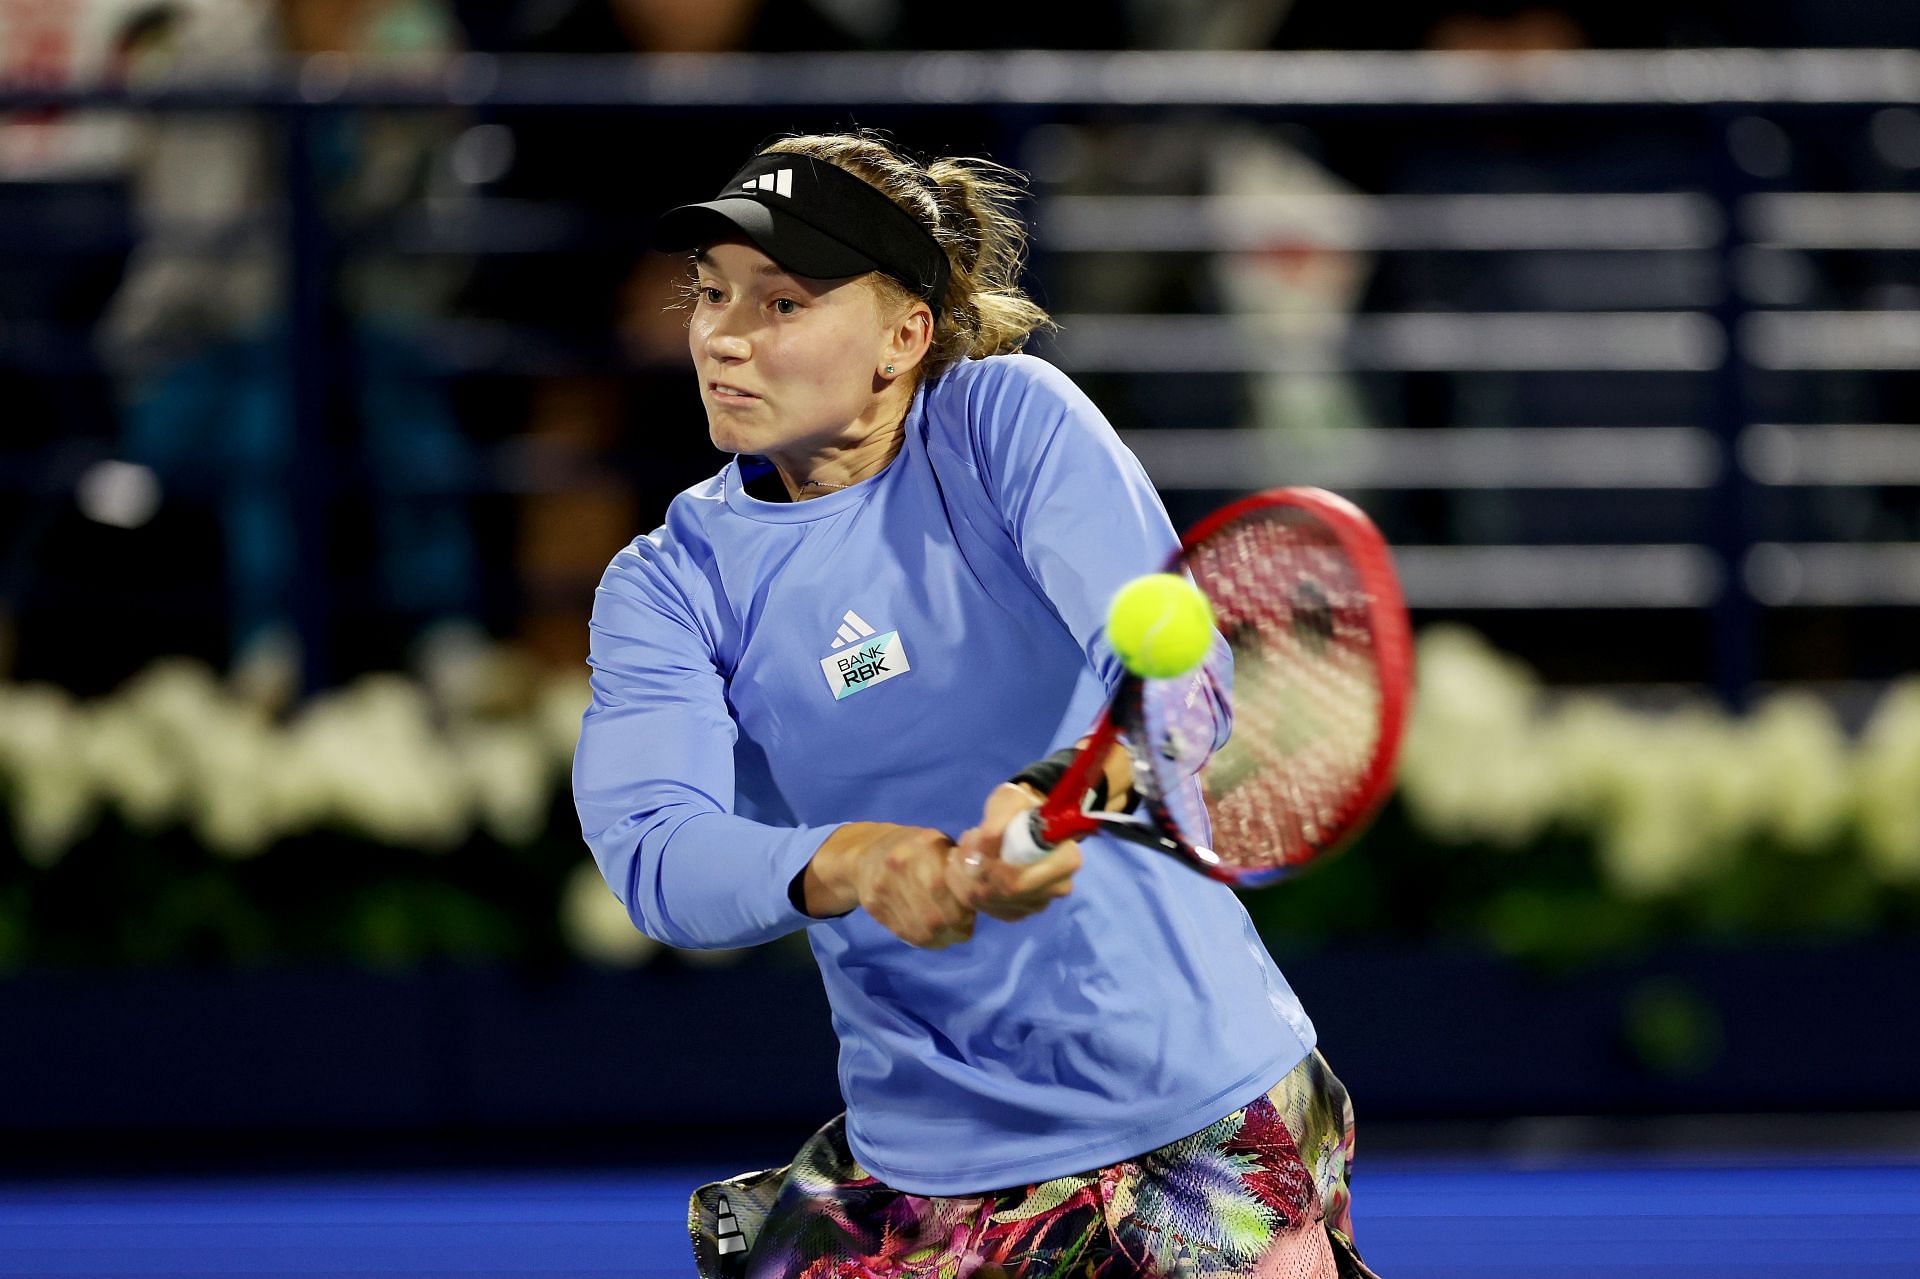 Elena Rybakina strikes the ball in Dubai